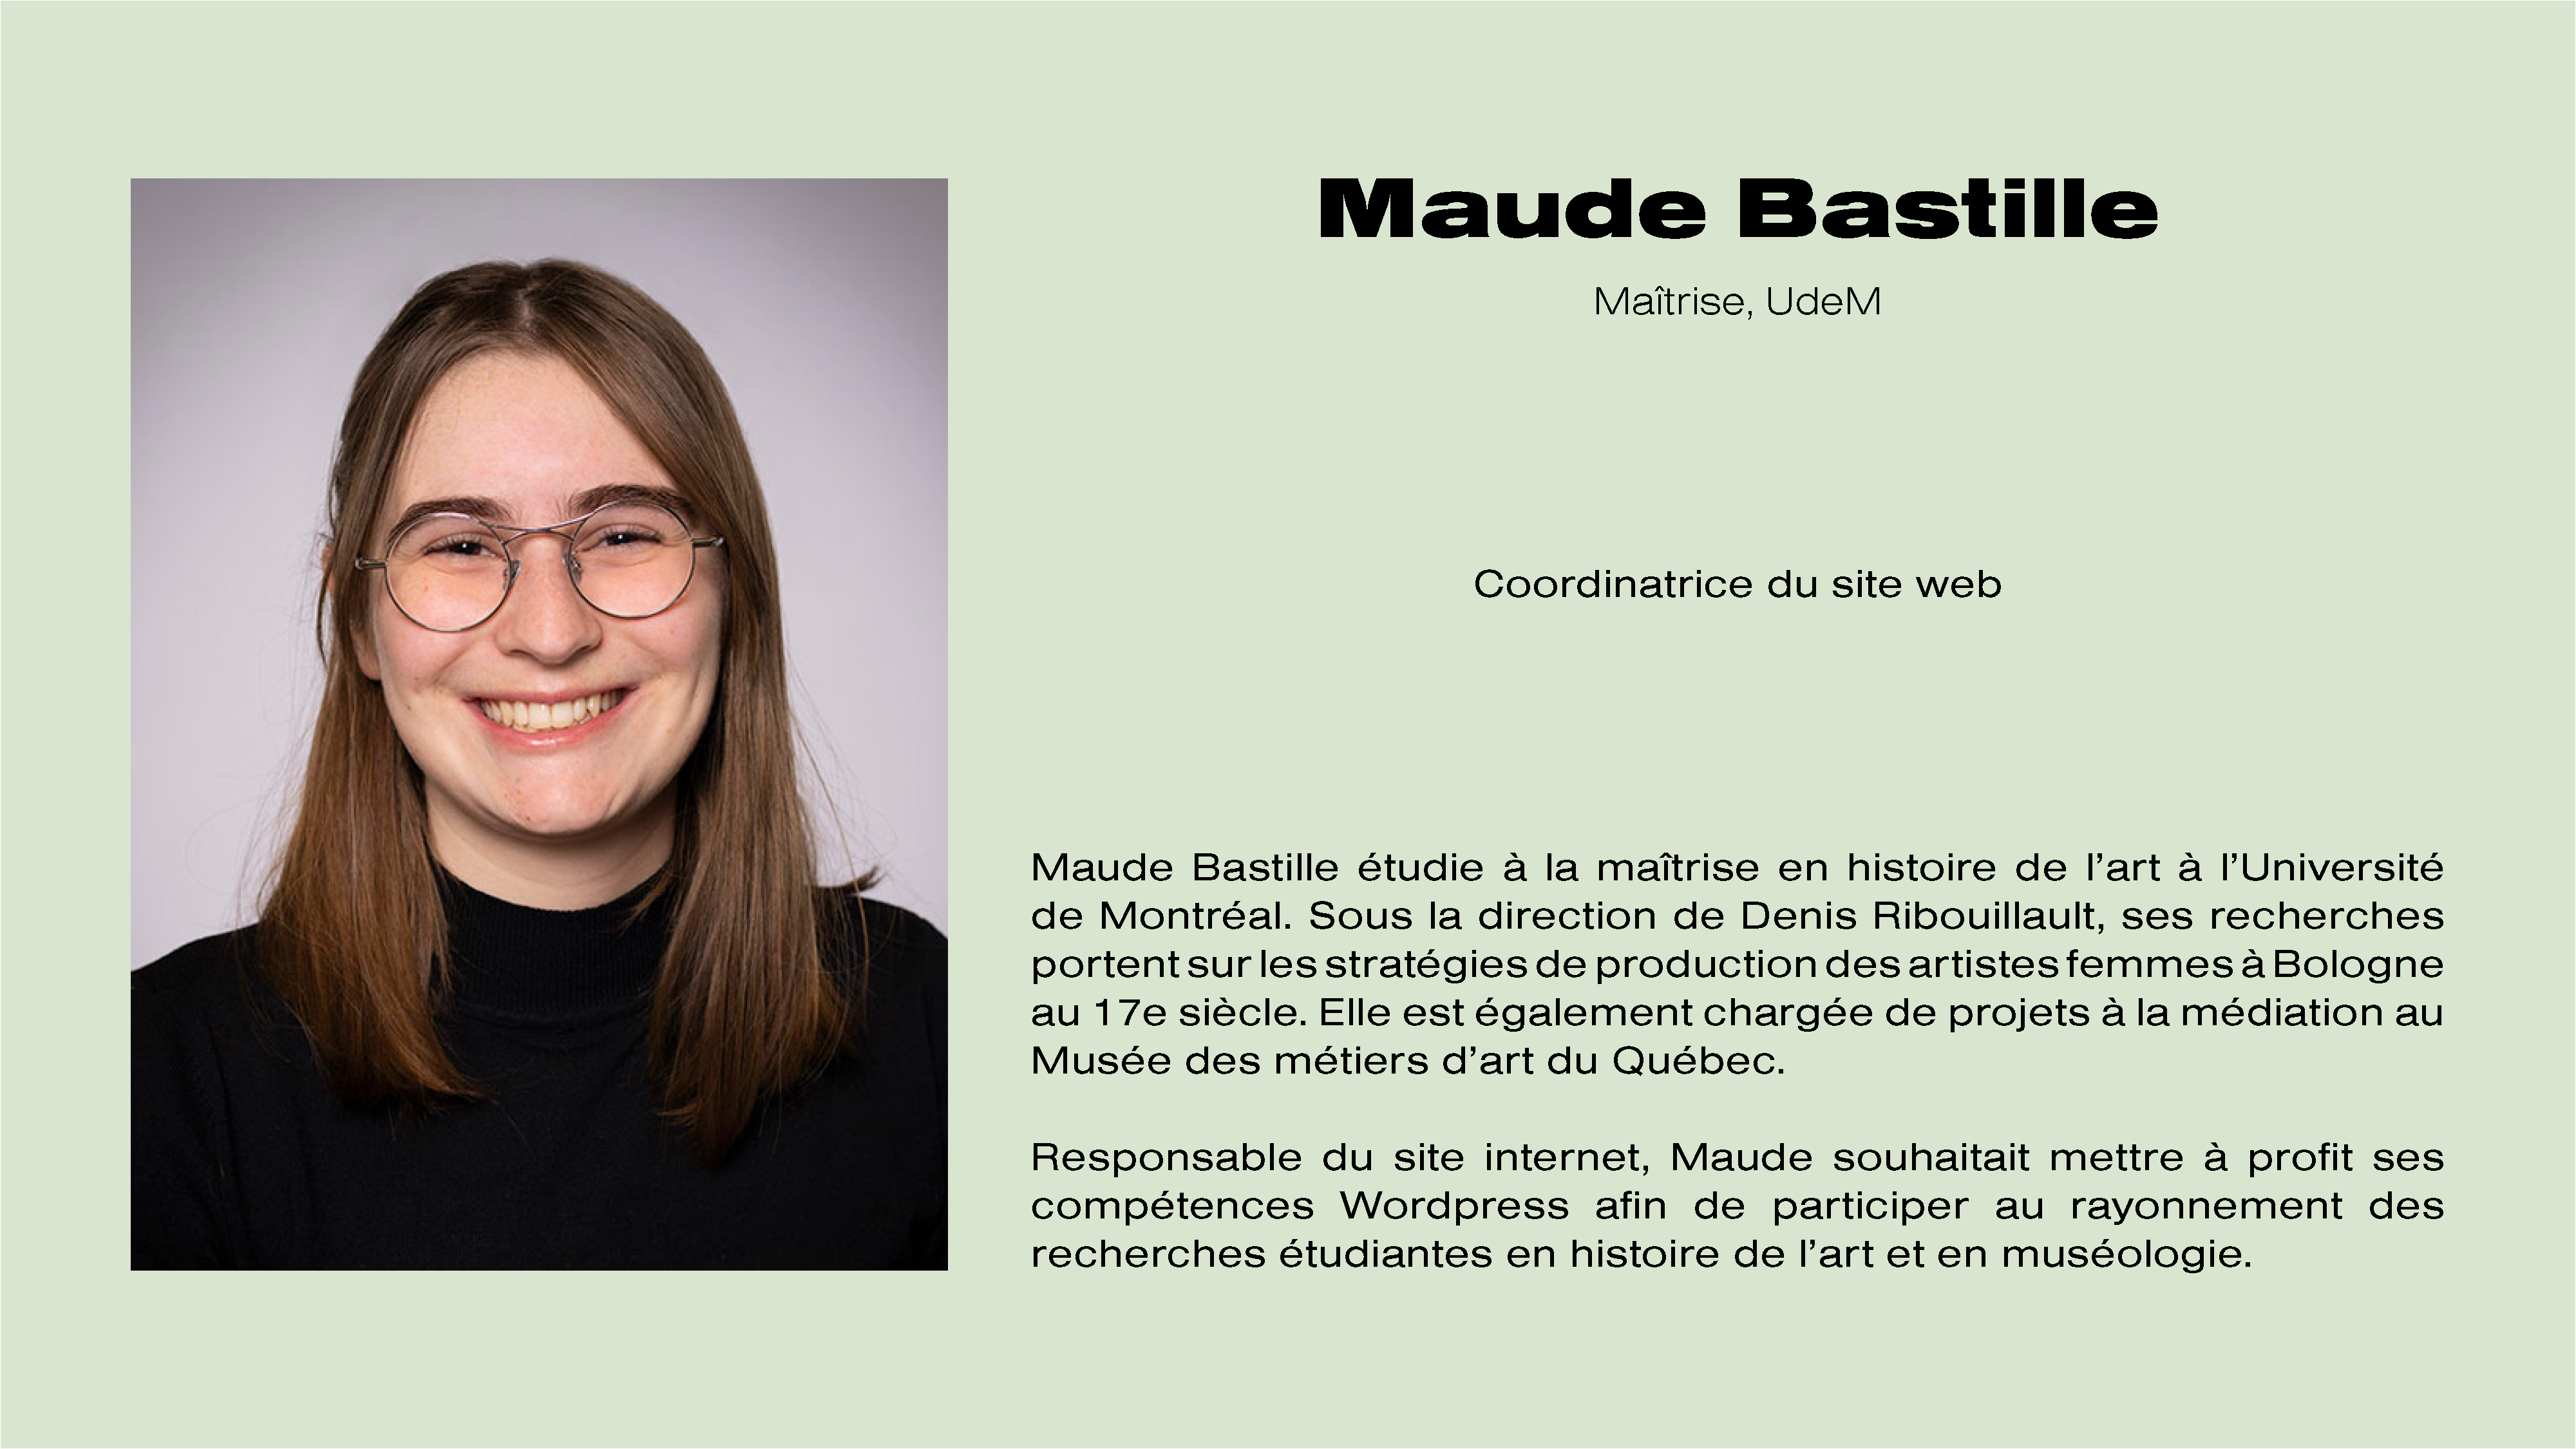 Maude Bastille